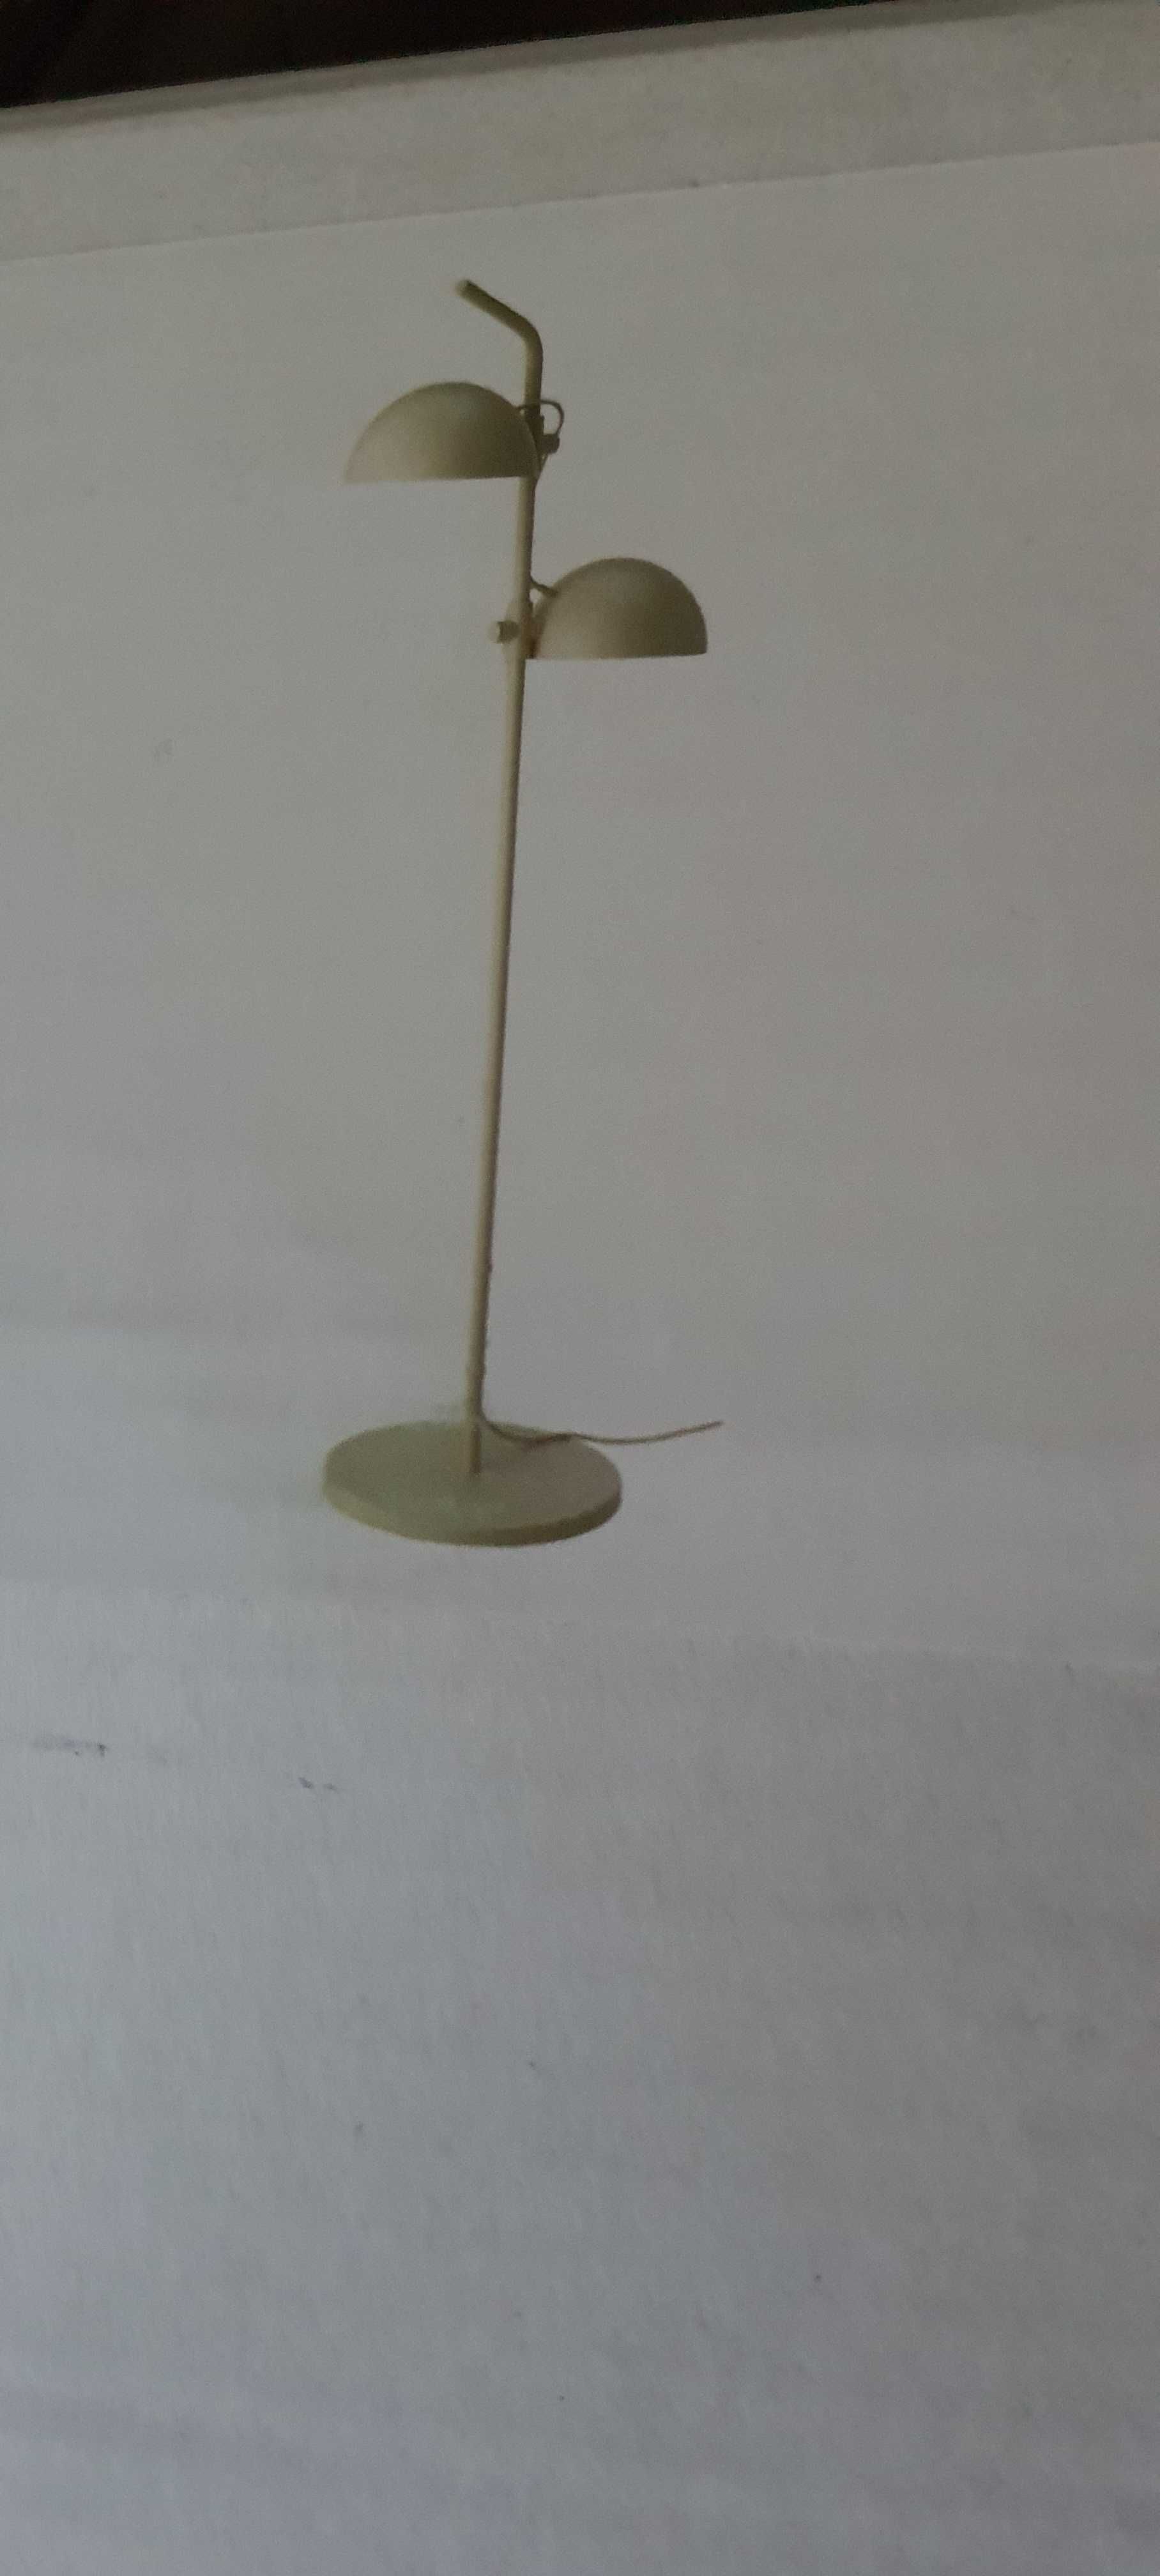 Lampa podlogowa led zewnetrzna, 100cm, Ikea